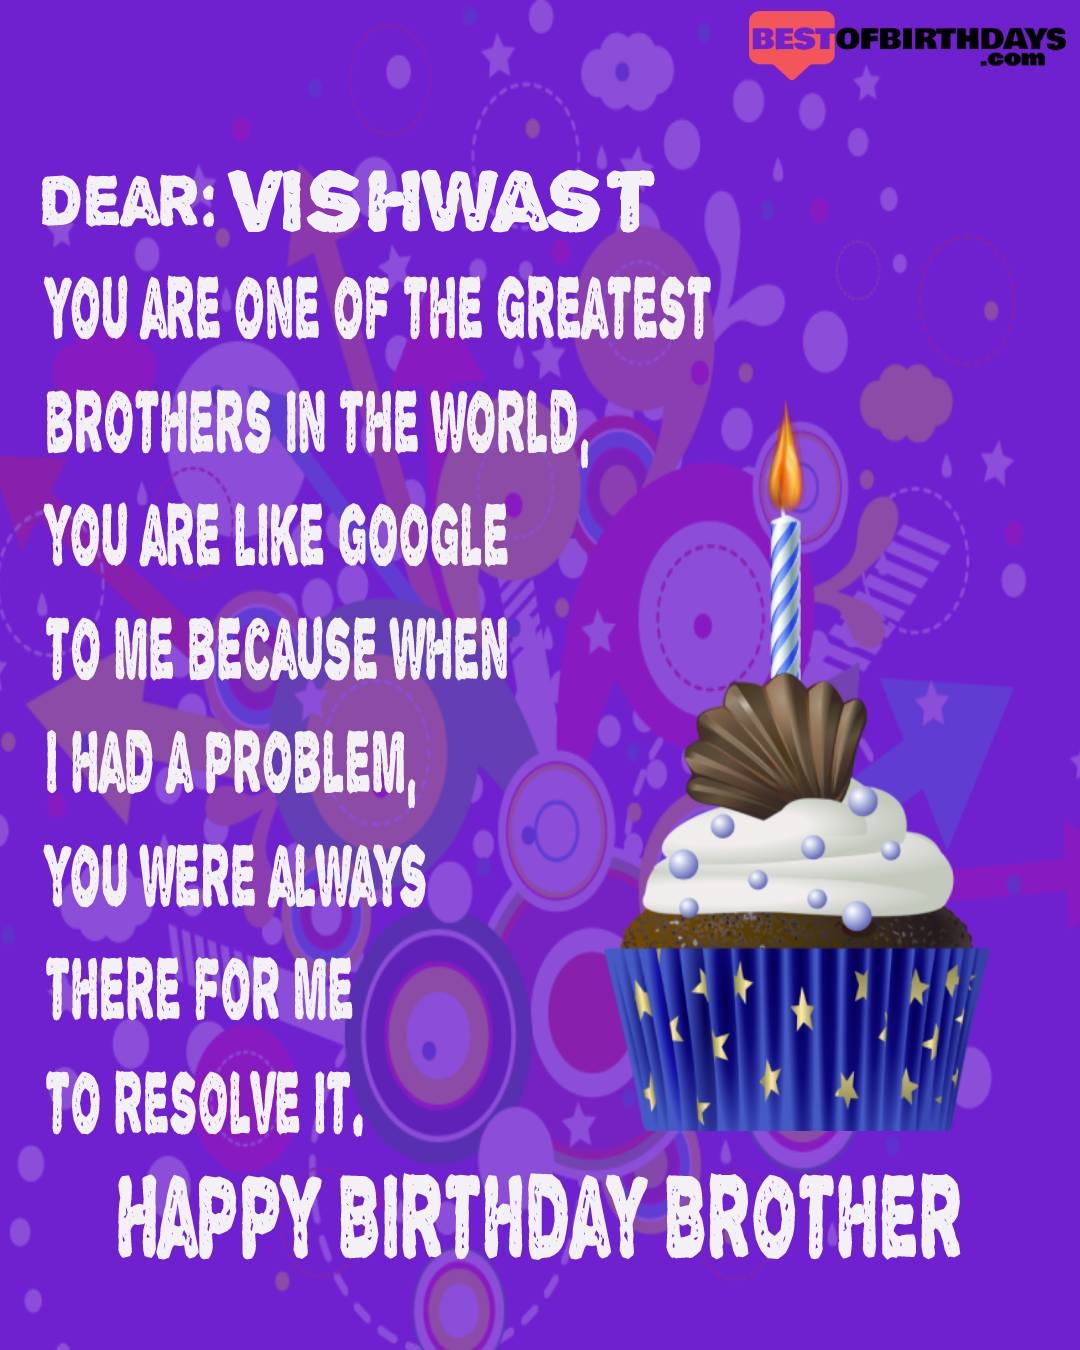 Happy birthday vishwast bhai brother bro